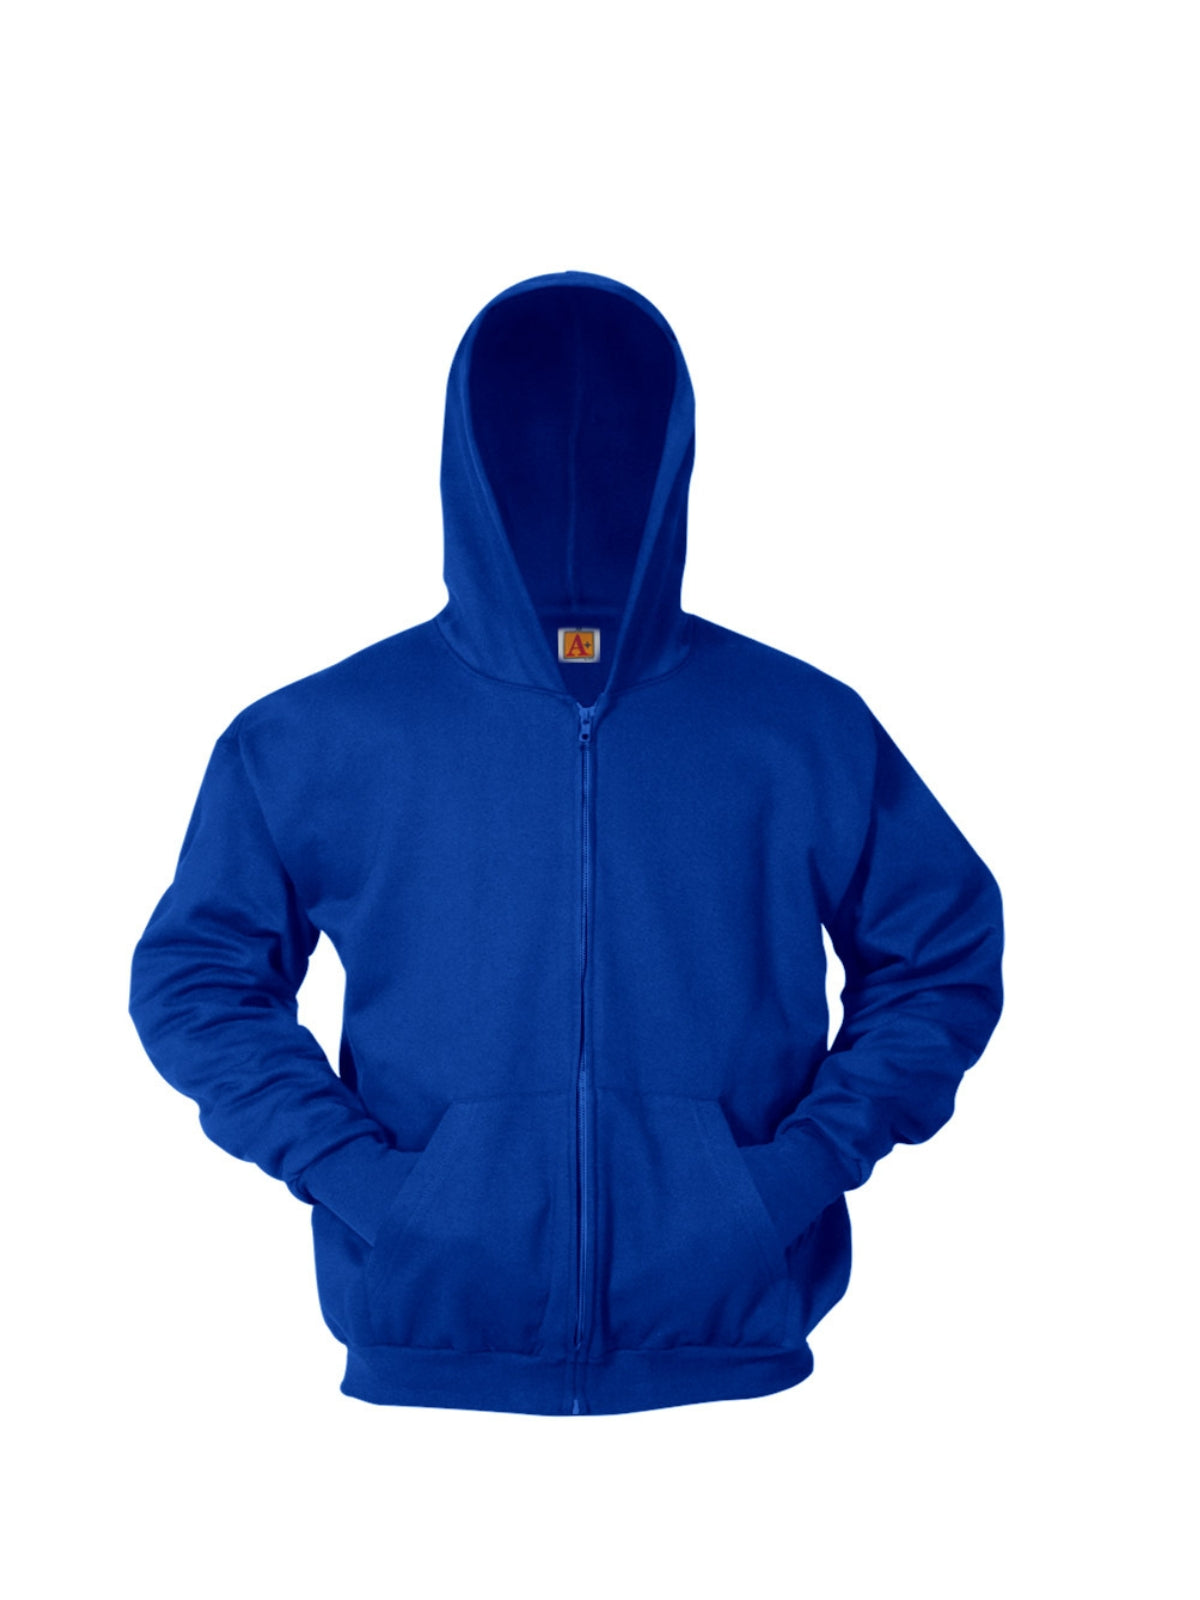 Unisex Hooded Sweatshirt - 6247 - Den Dark Royal